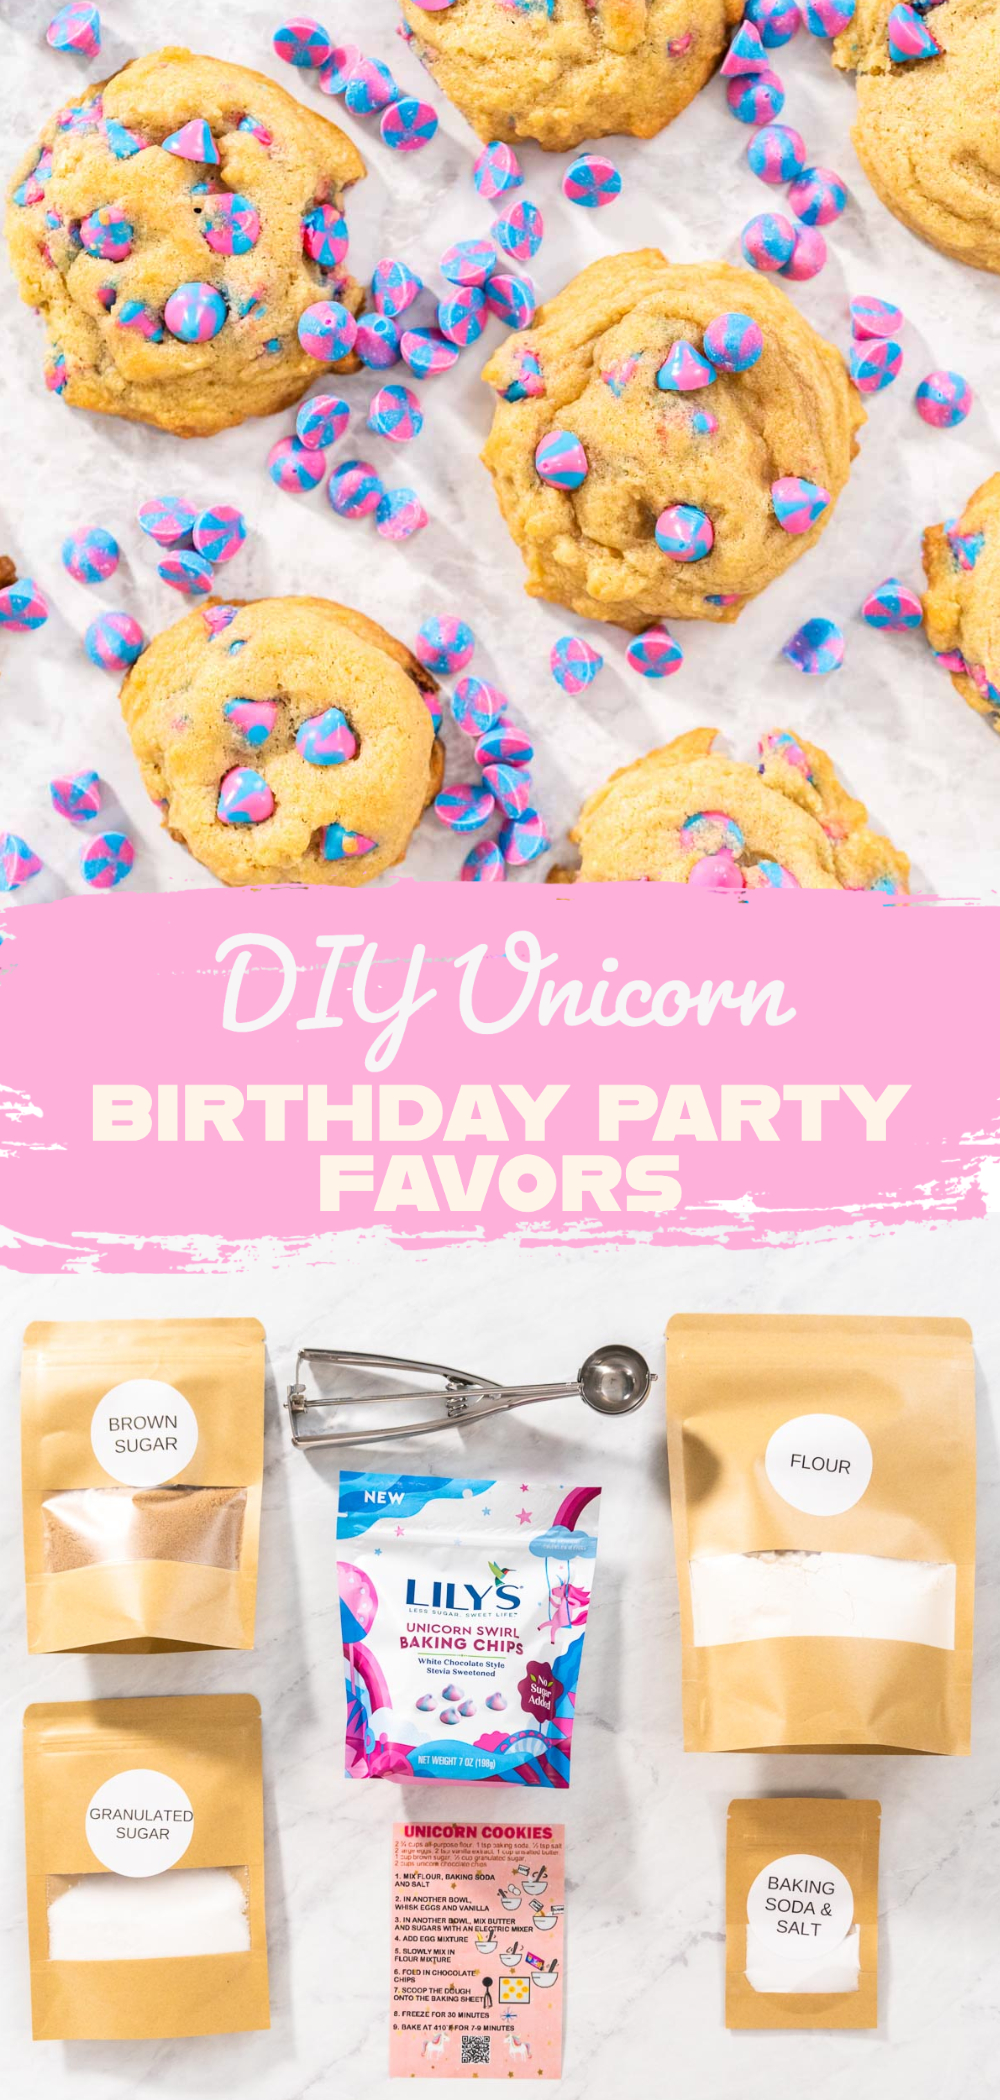 DIY Unicorn Birthday Party favors